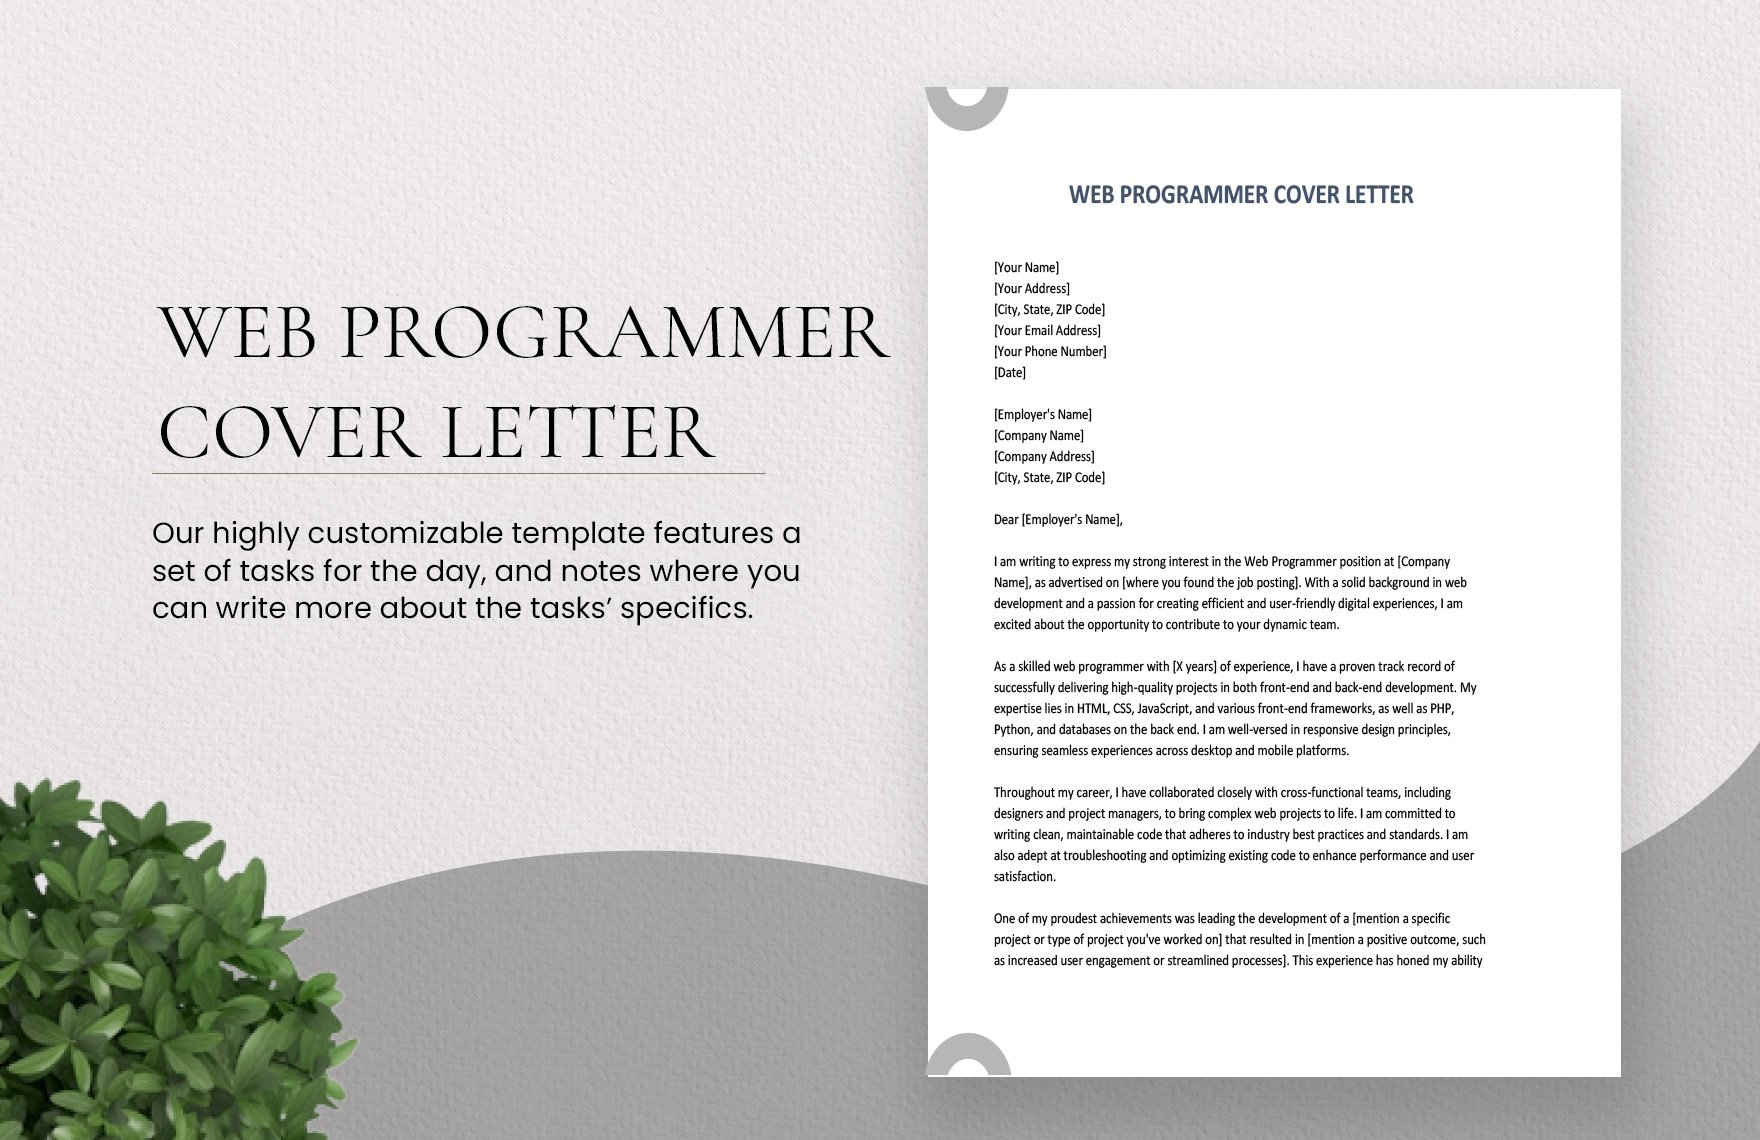 Web Programmer Cover Letter in Word, Google Docs